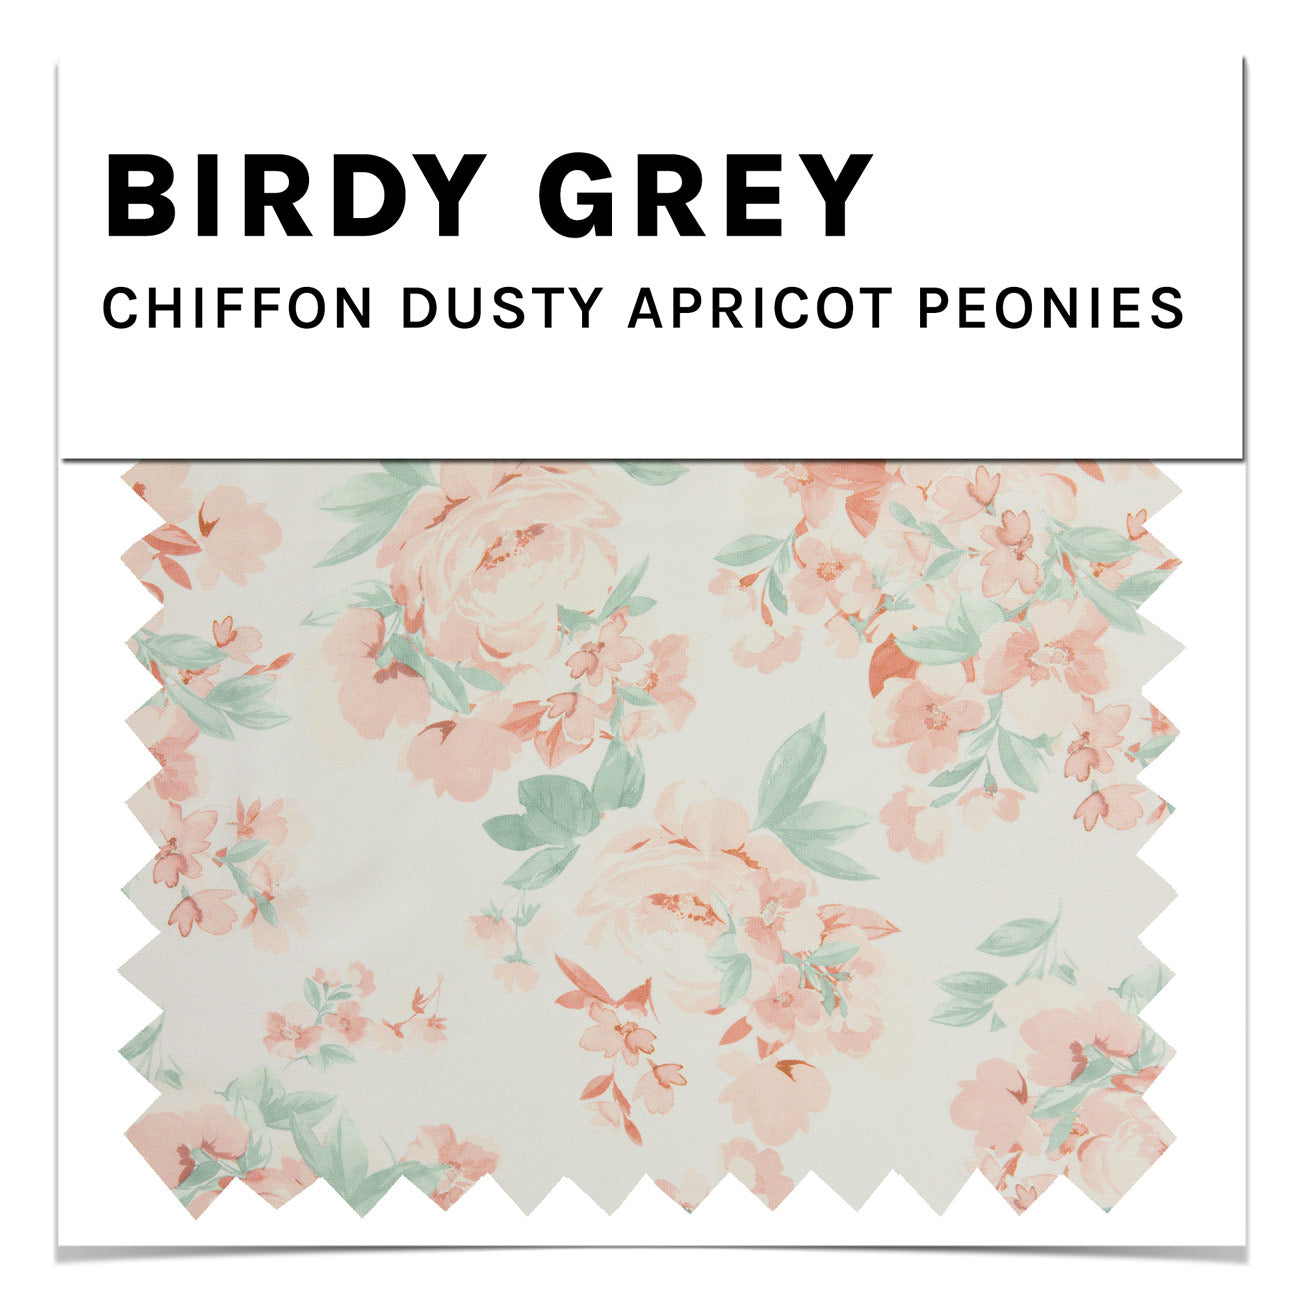 Chiffon in Dusty Apricot Peonies Swatch by Birdy Grey